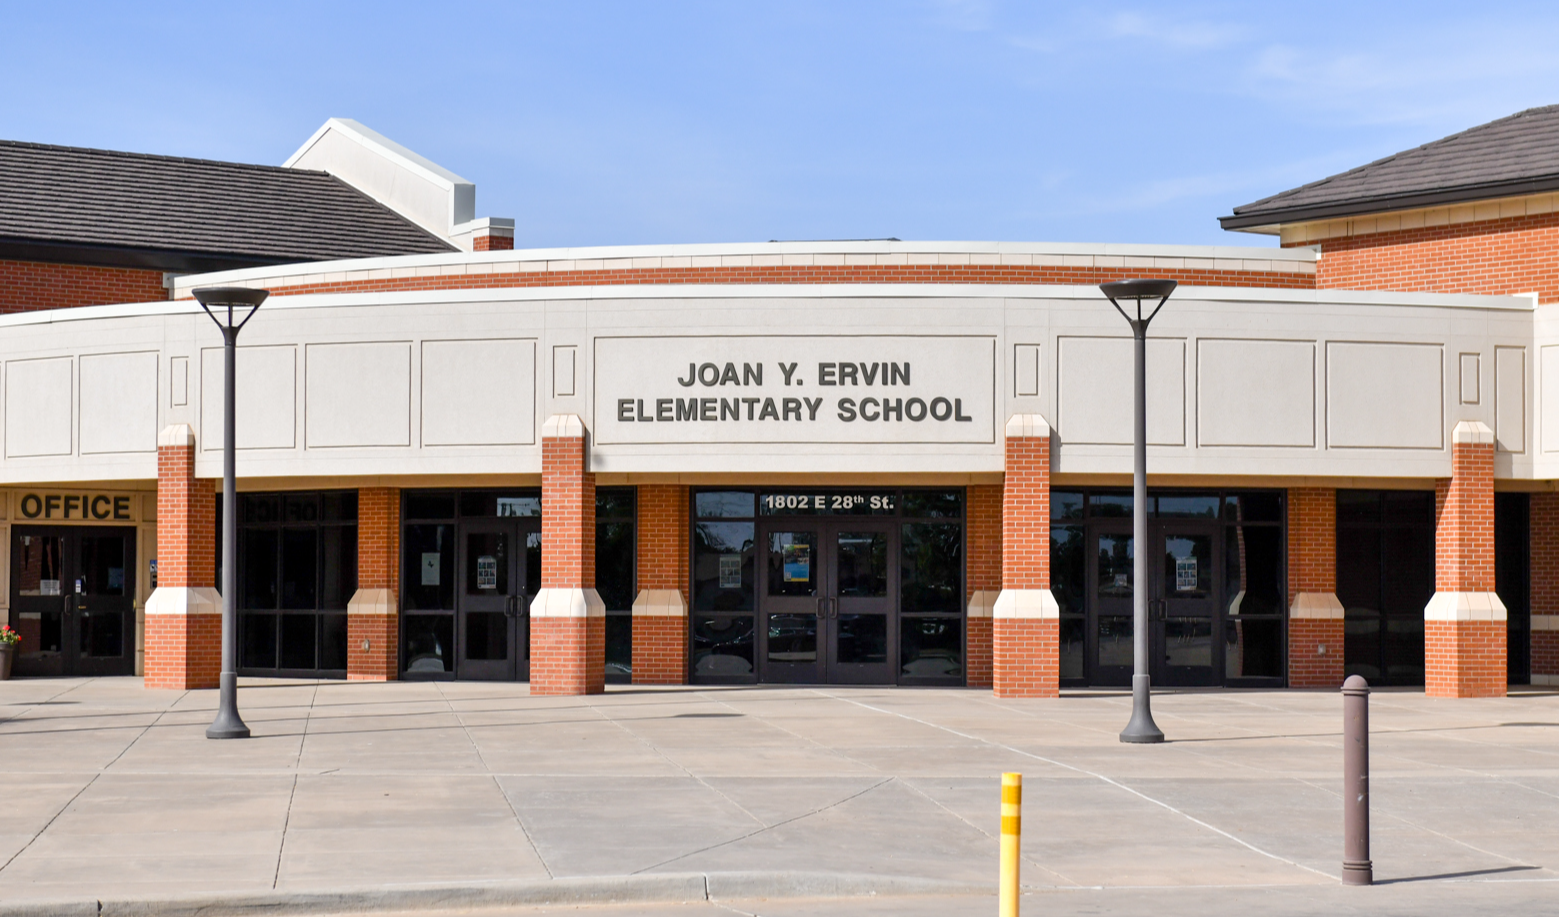 Ervin Elementary School